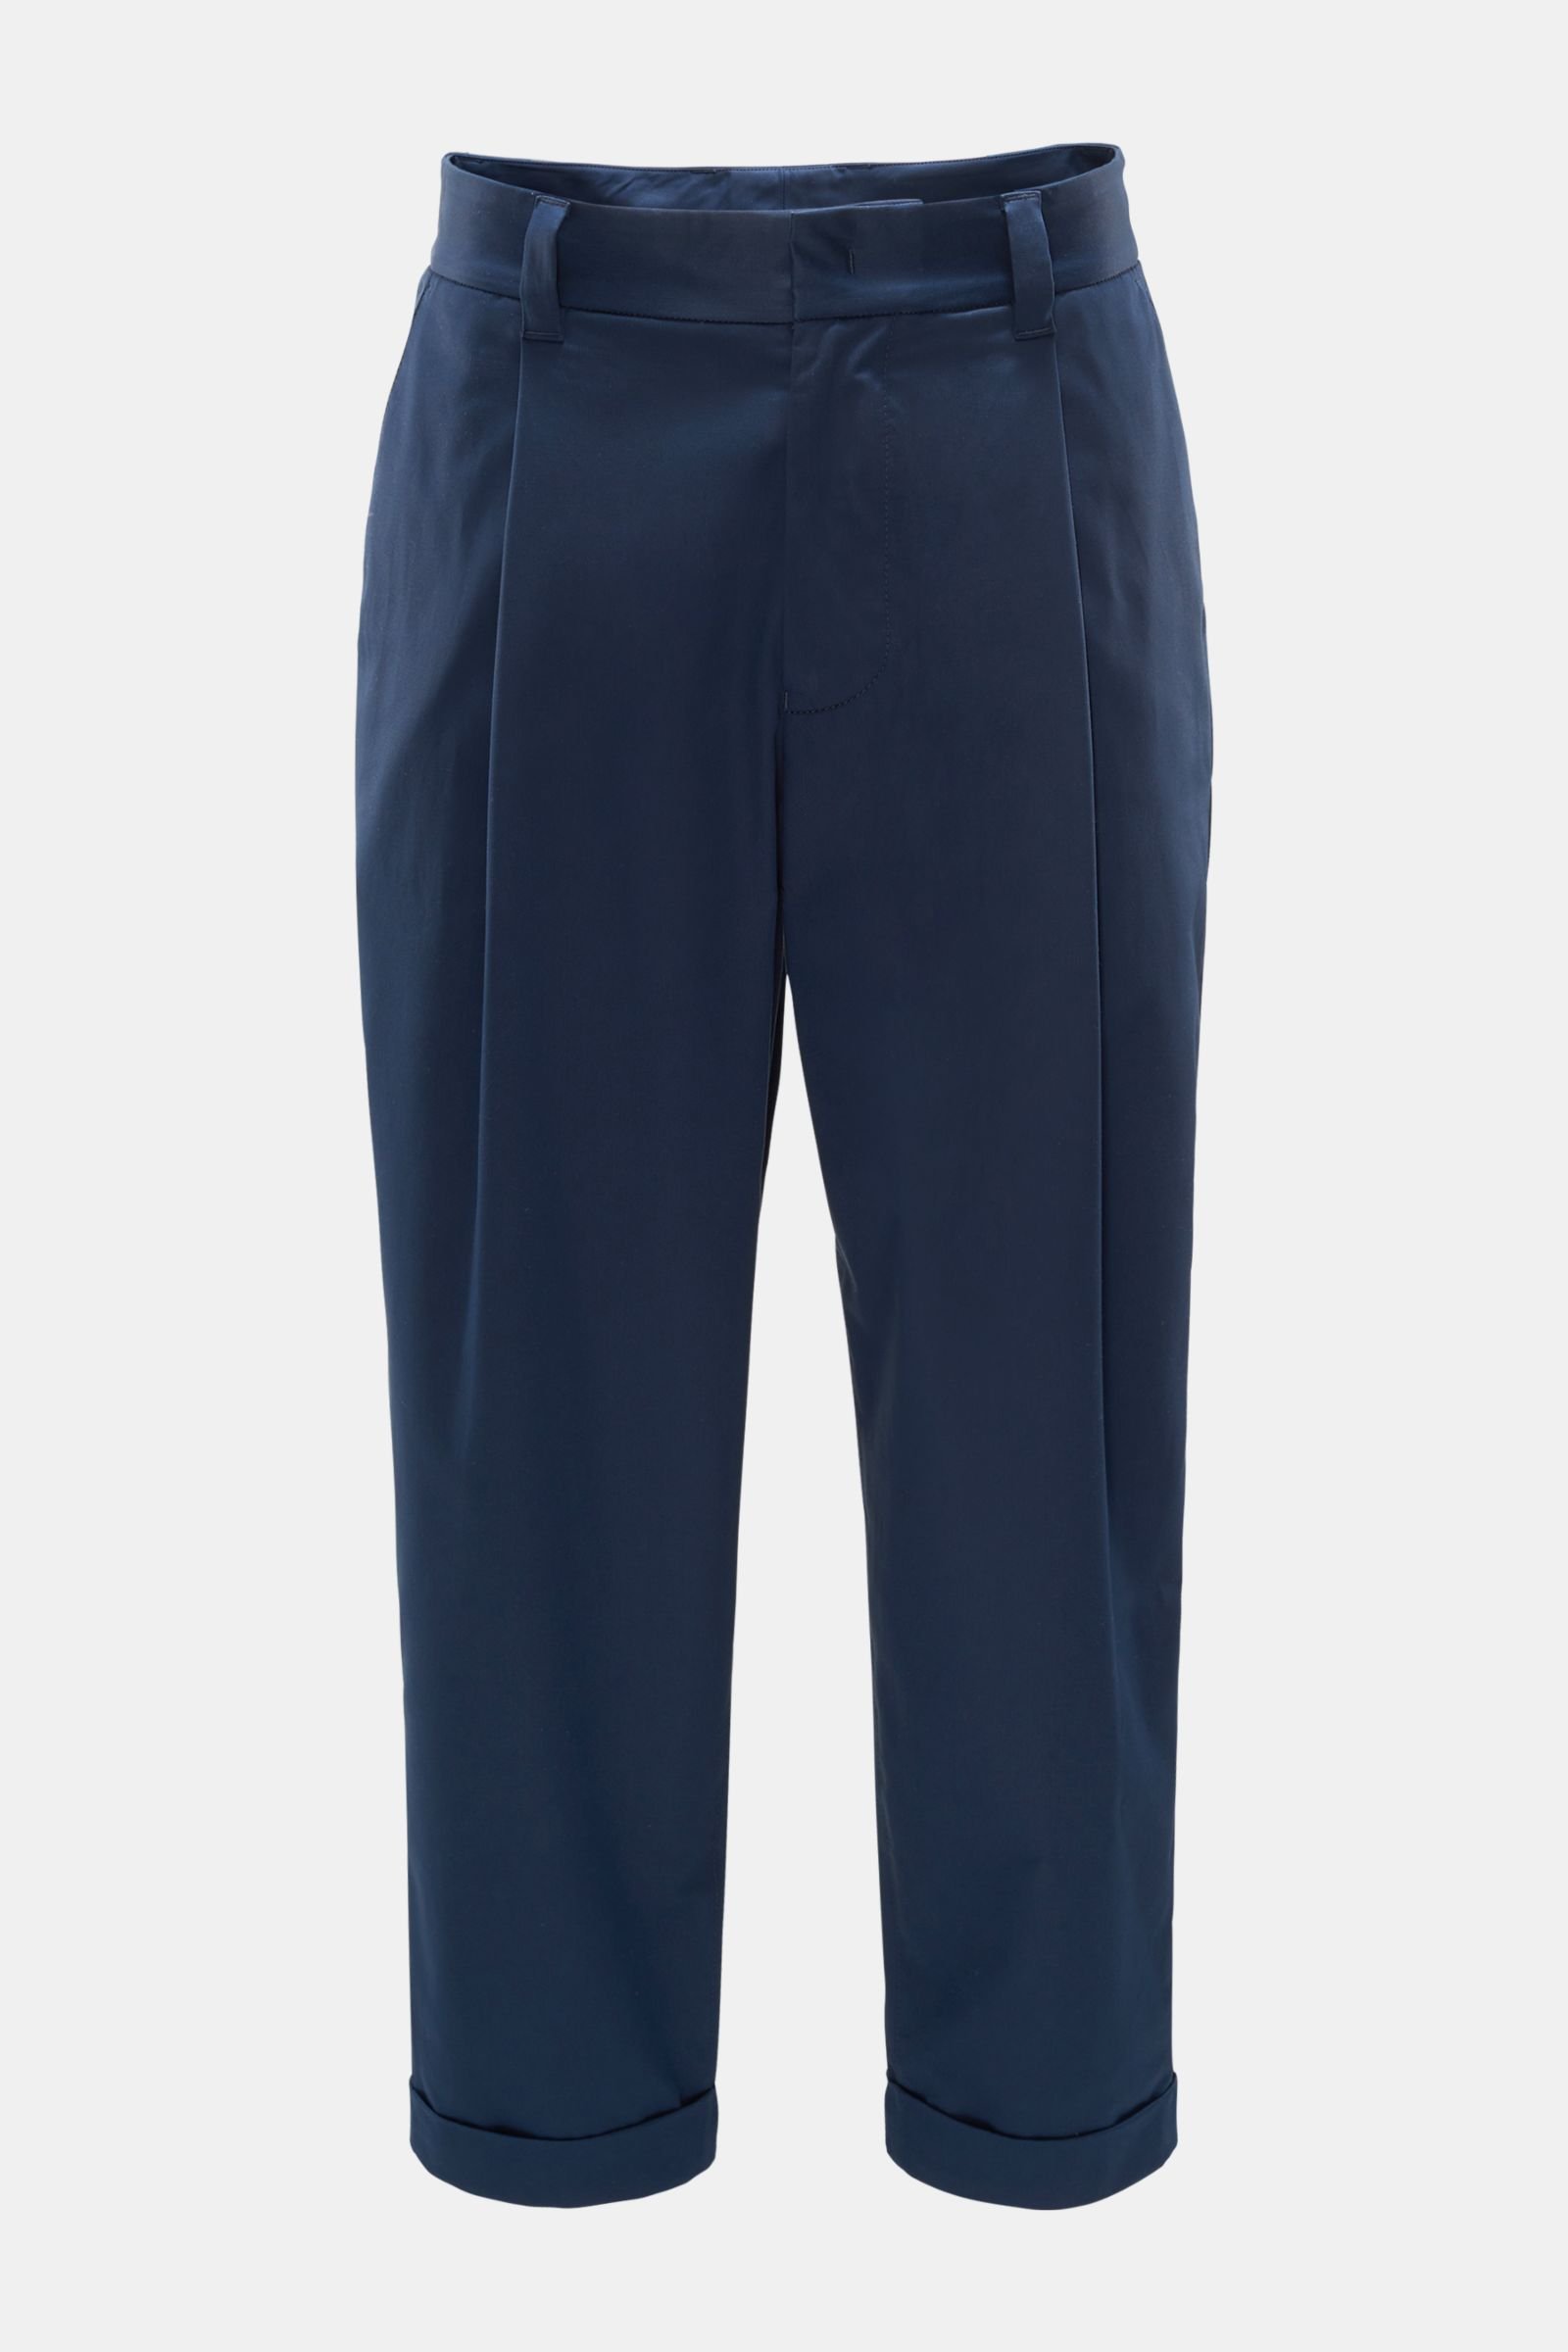 Cotton trousers dark blue